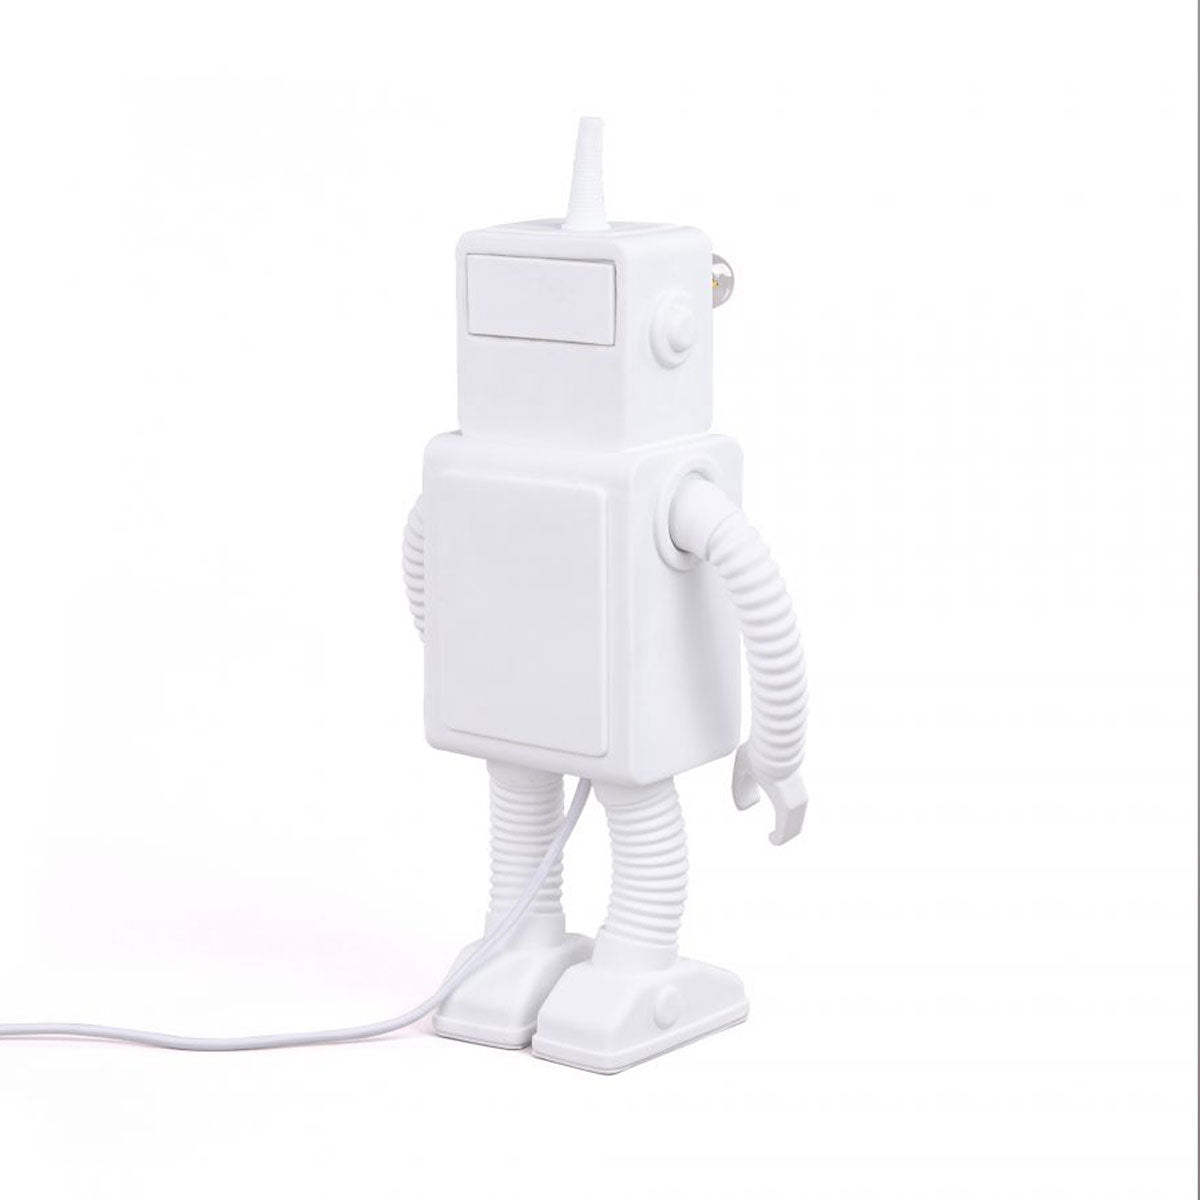 Robot Lamp - Seletti